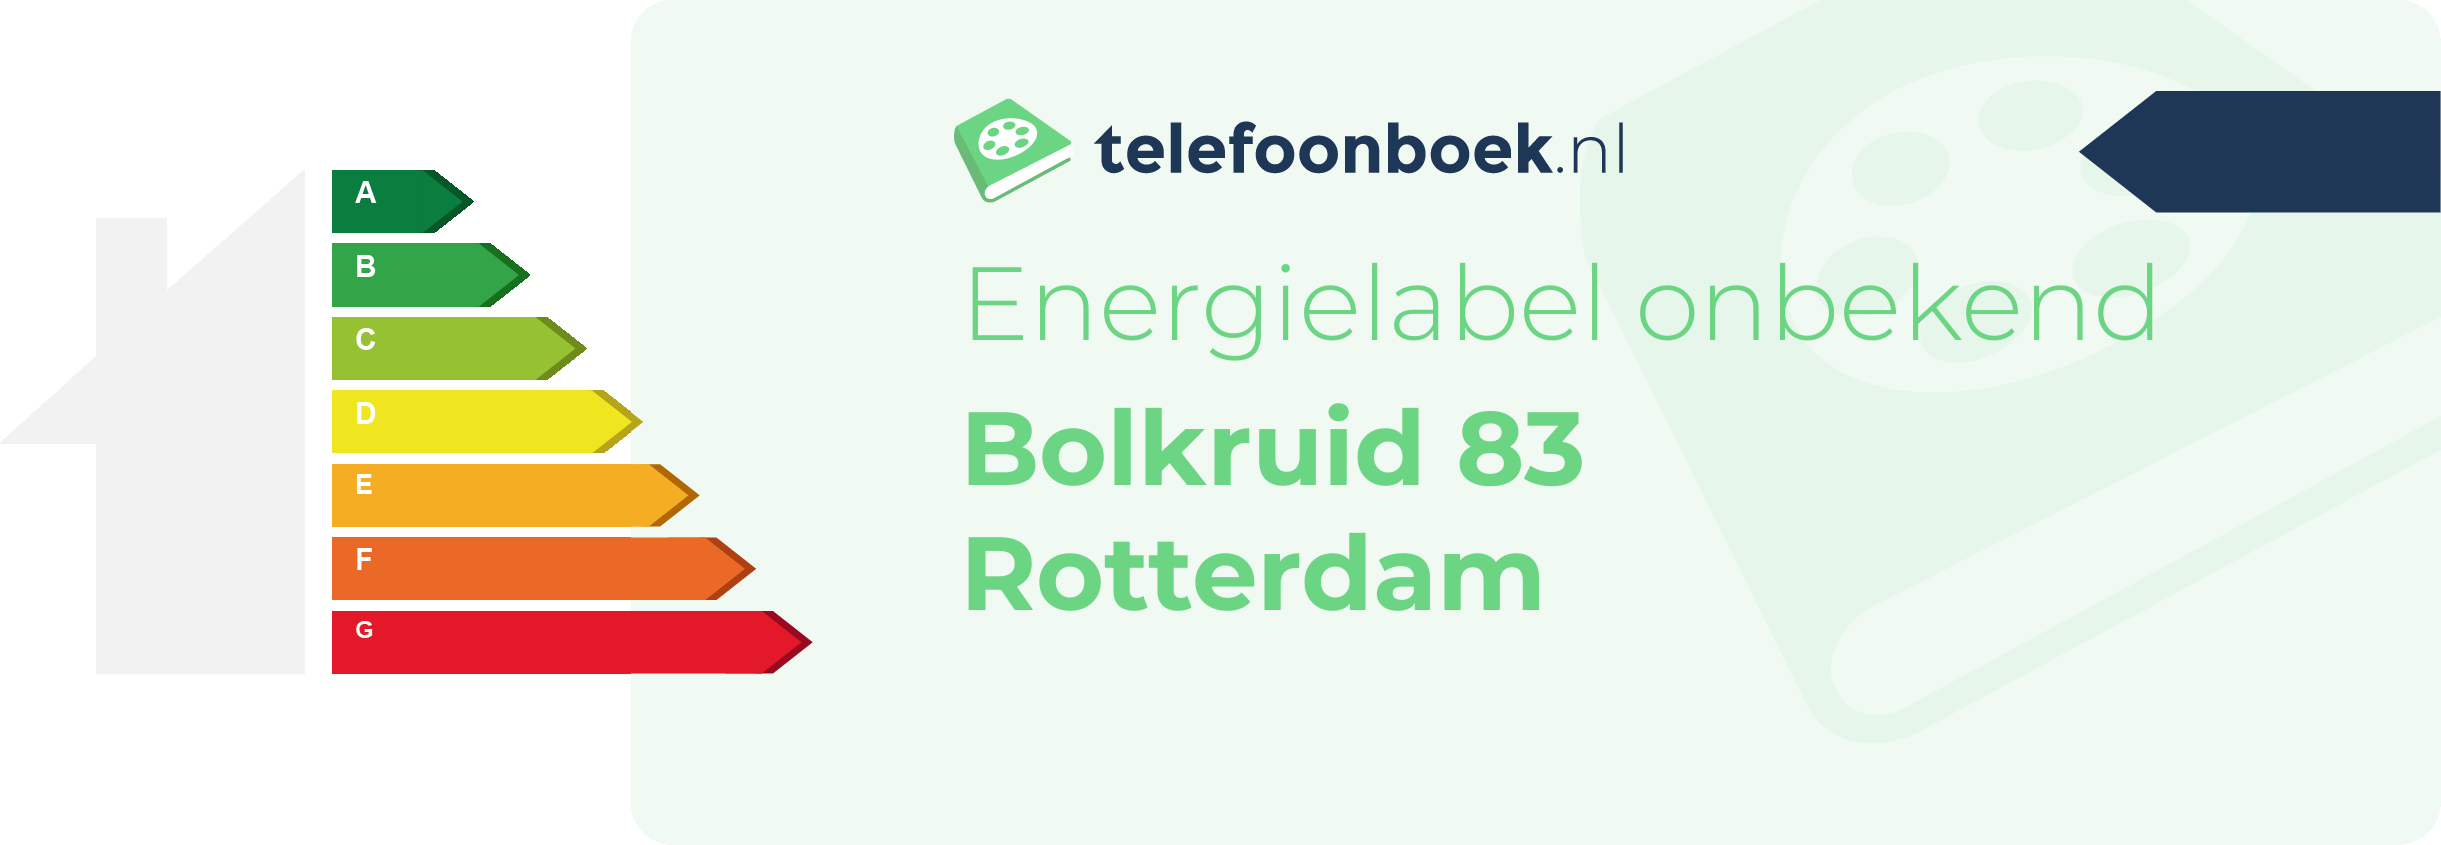 Energielabel Bolkruid 83 Rotterdam